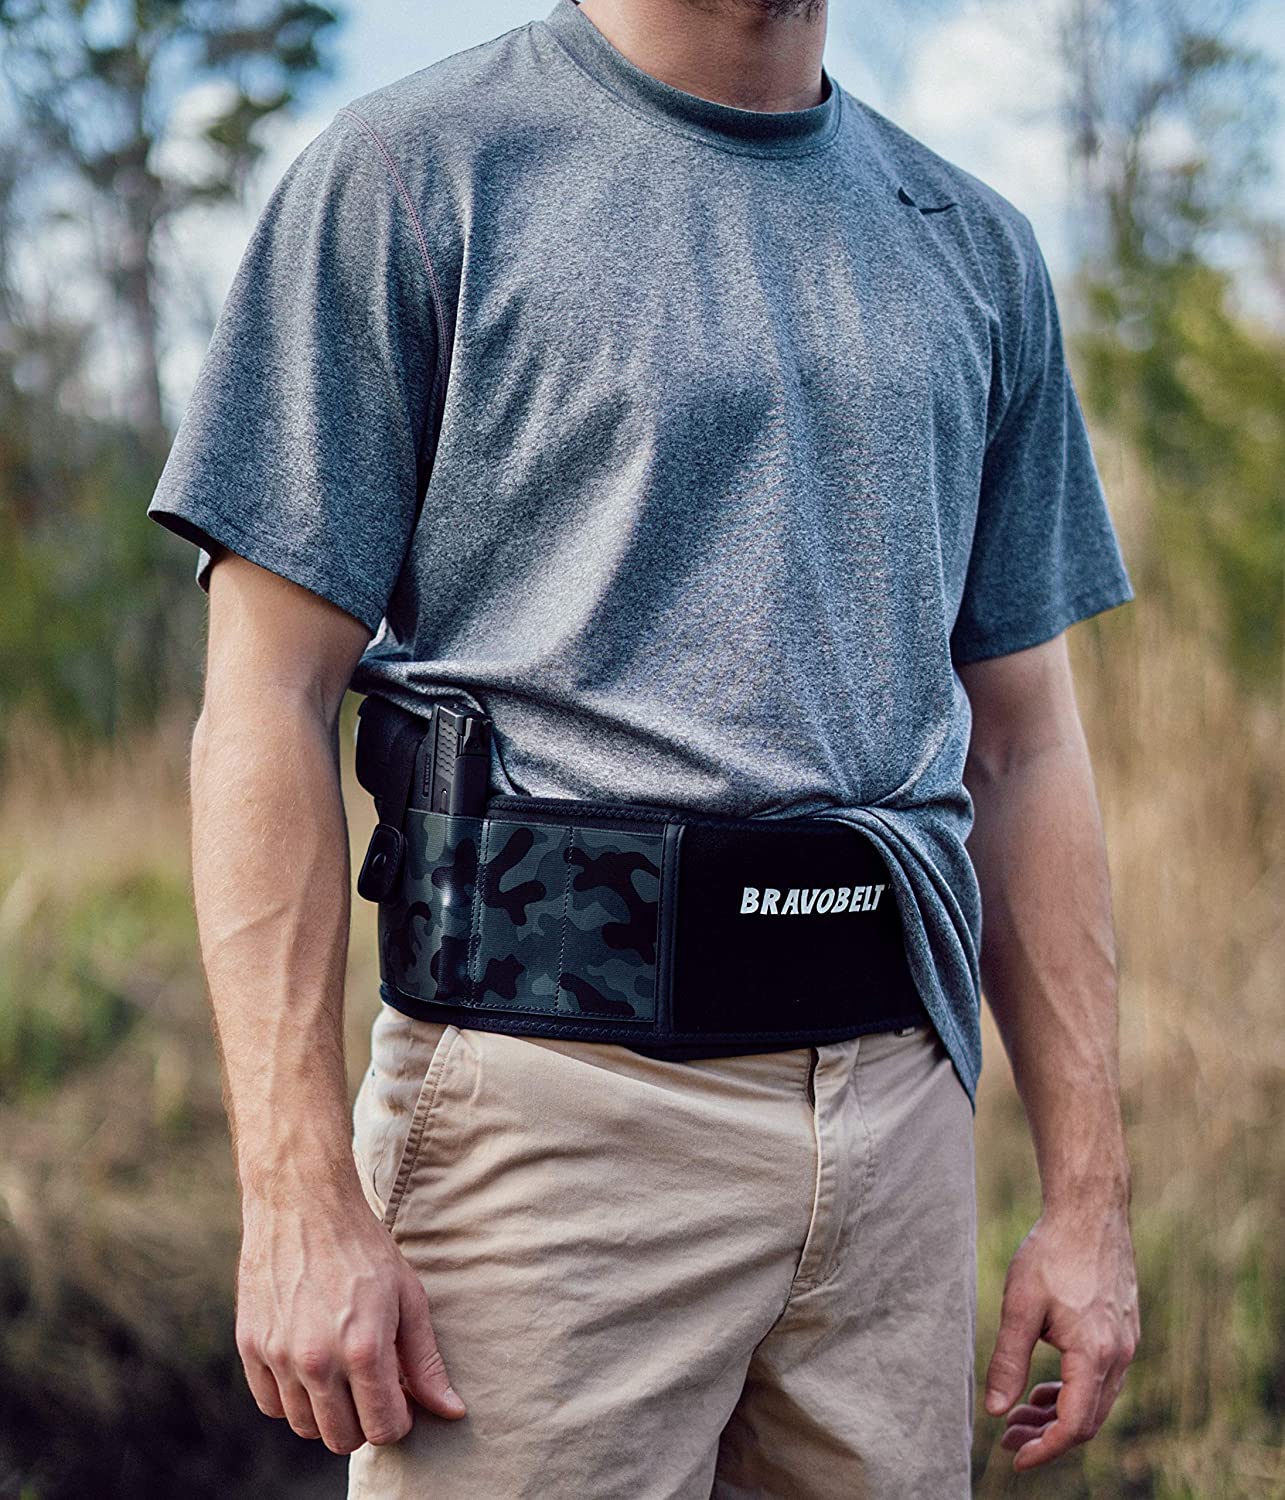 bravobelt belly band holster for concealed carry